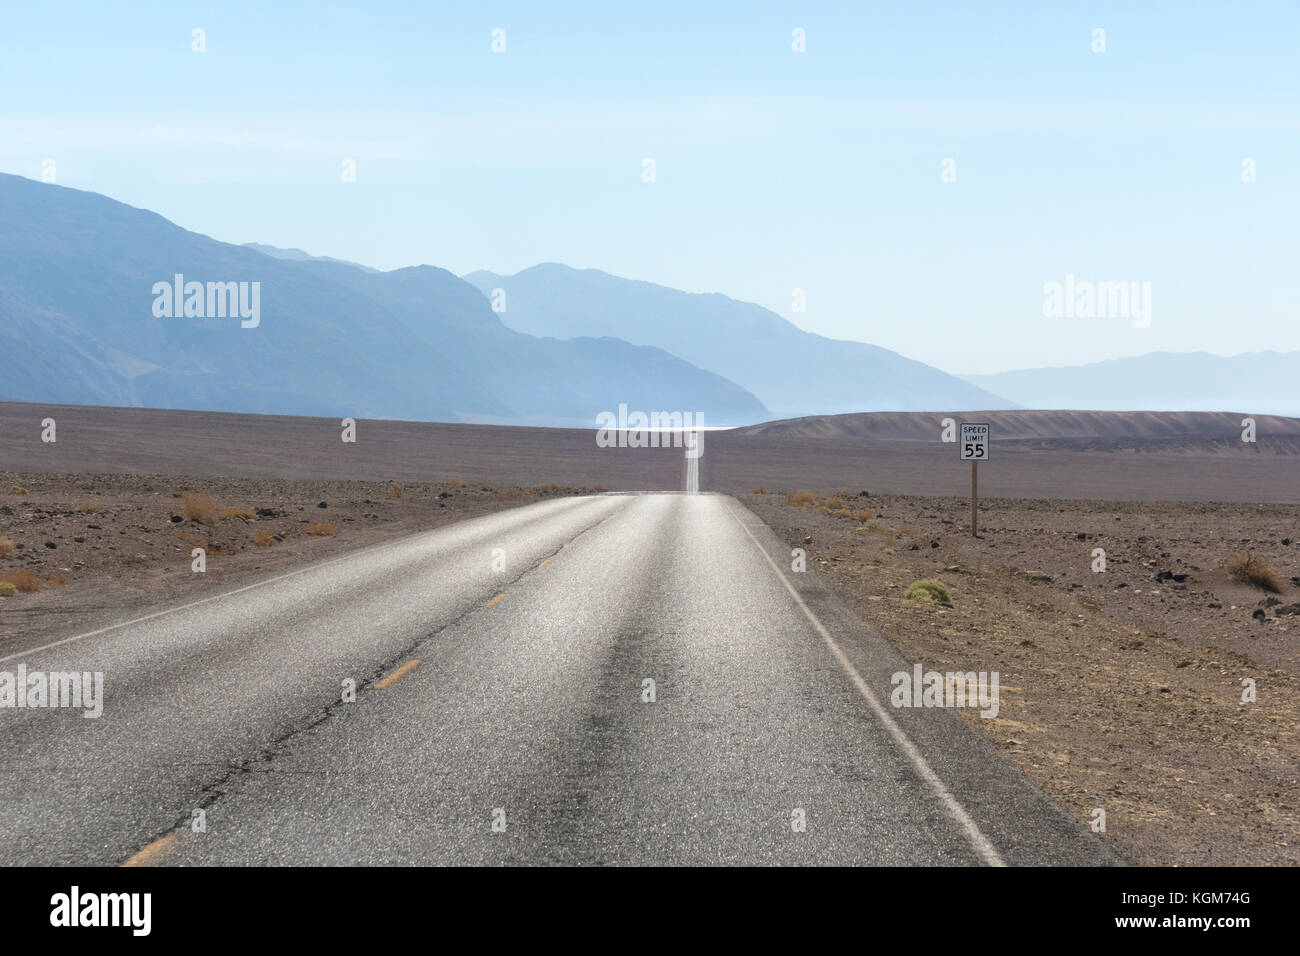 Deserto vuoto road. Death Valley Badwater Road con bacino Badwater scintillante nella distanza. Foto Stock